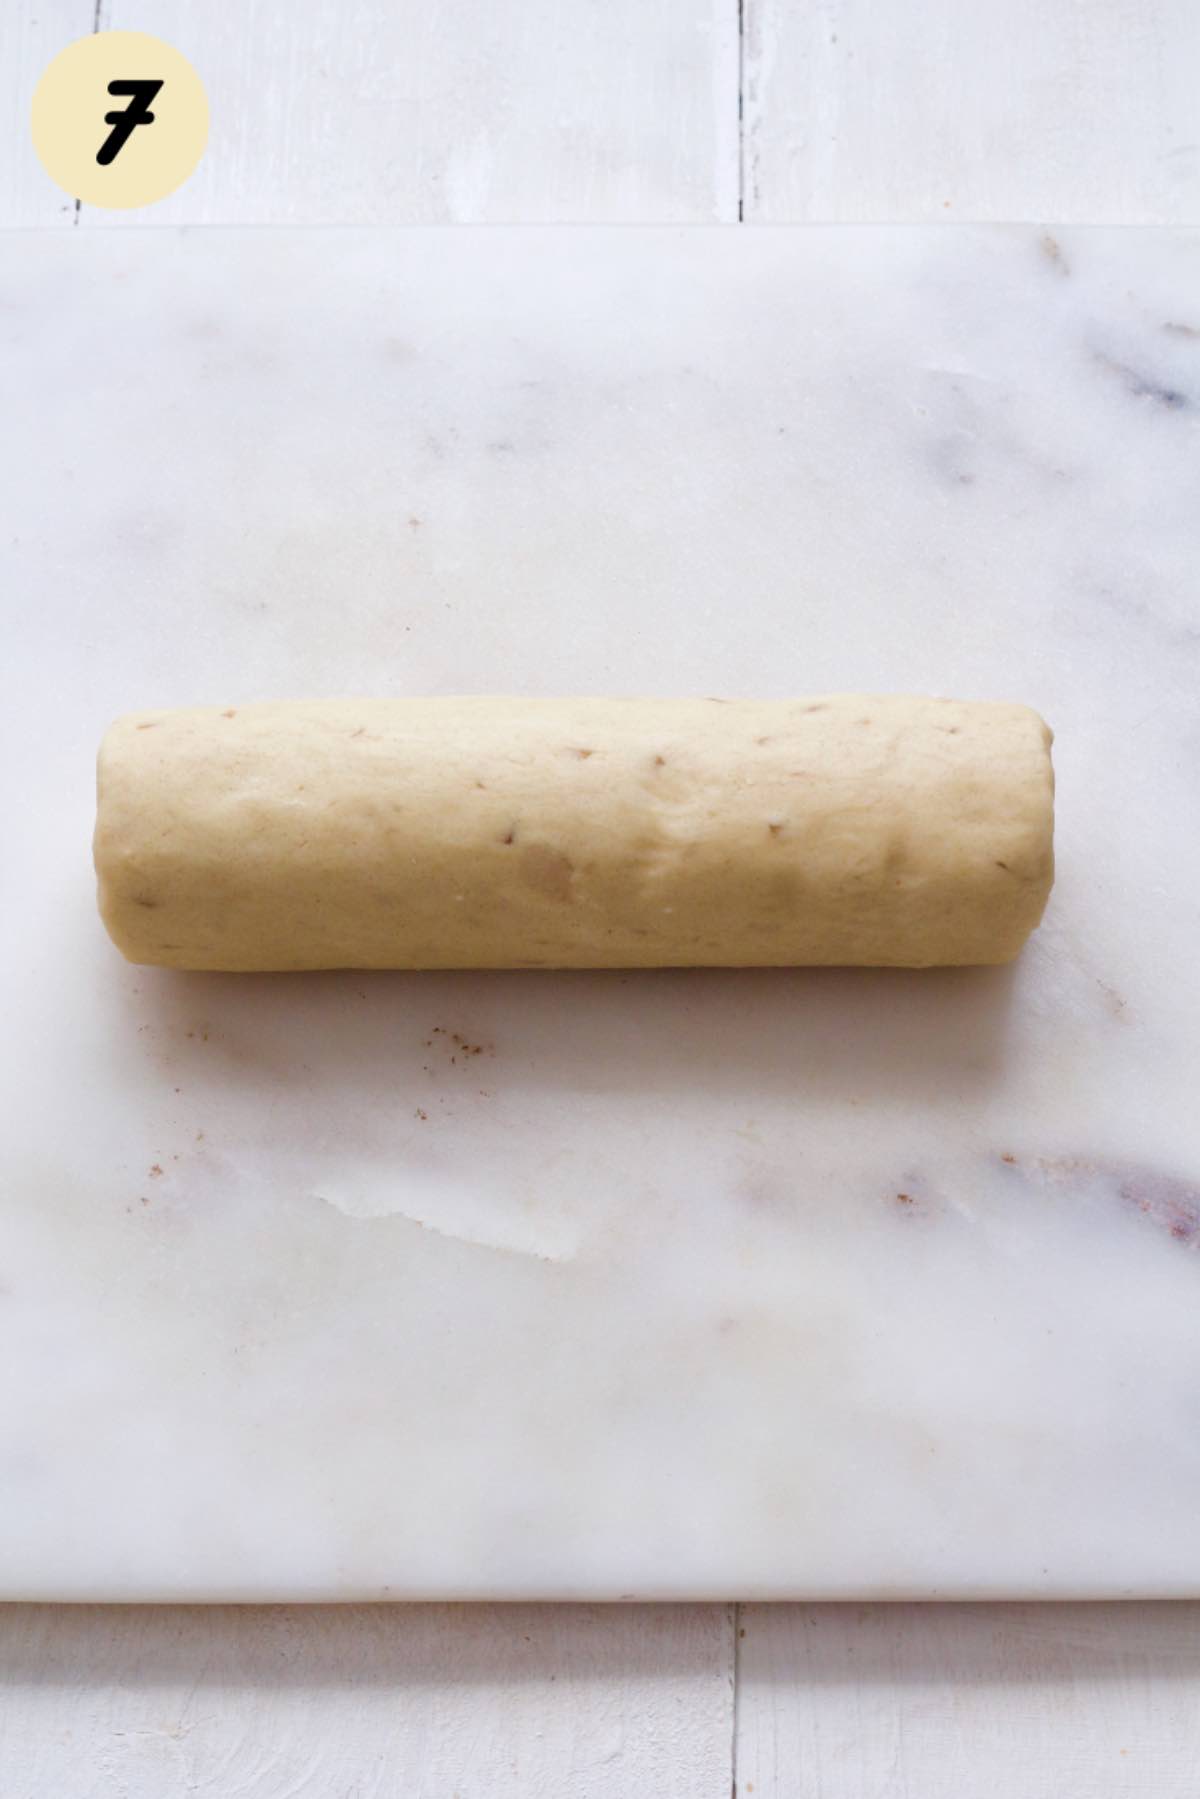 Shortbread dough shaped into a log.